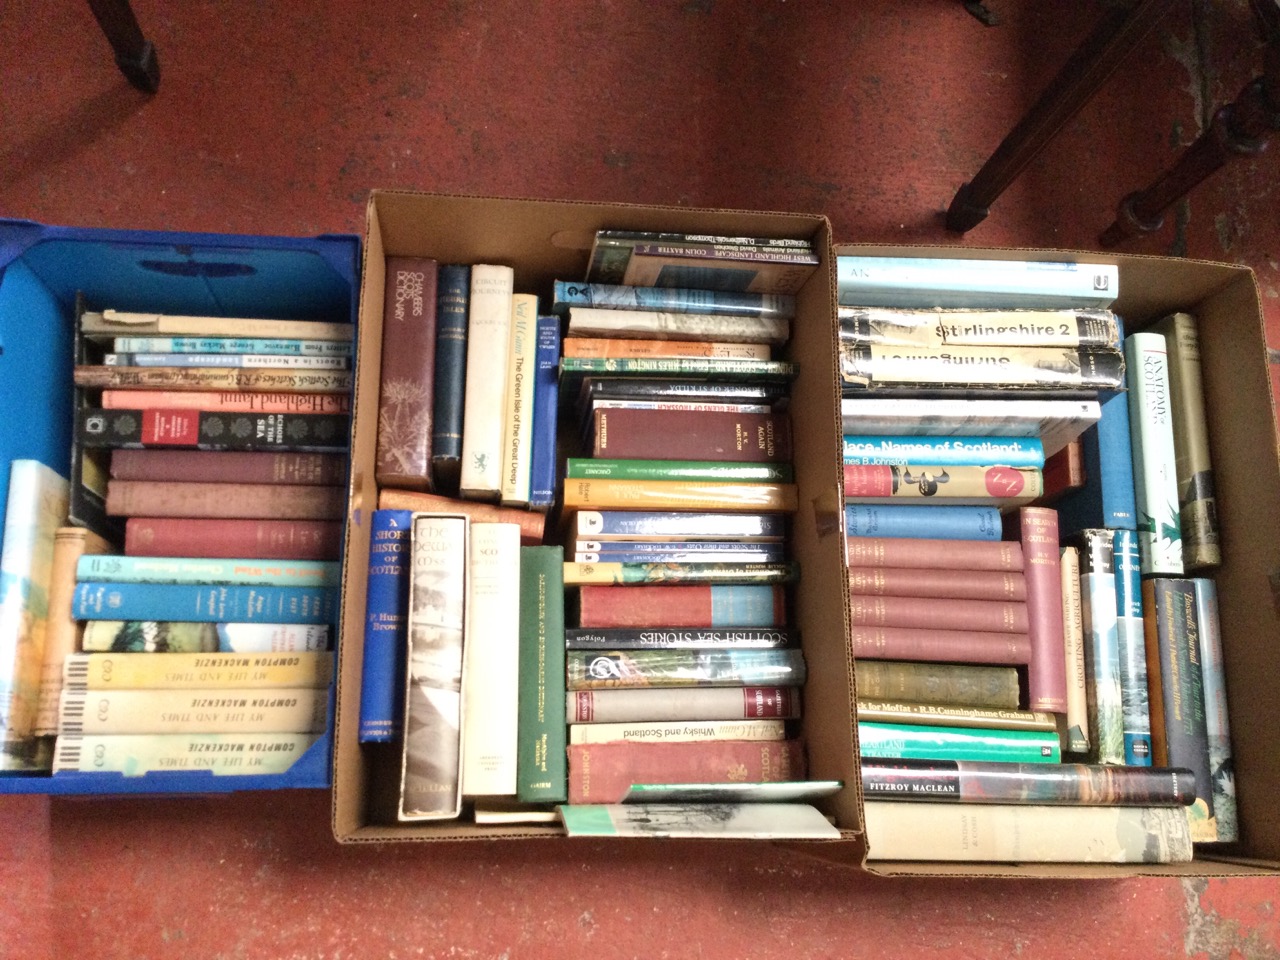 A quantity of Scottish books - clans, histories, runs of Compton Mackenzie, travel, Inveraray,